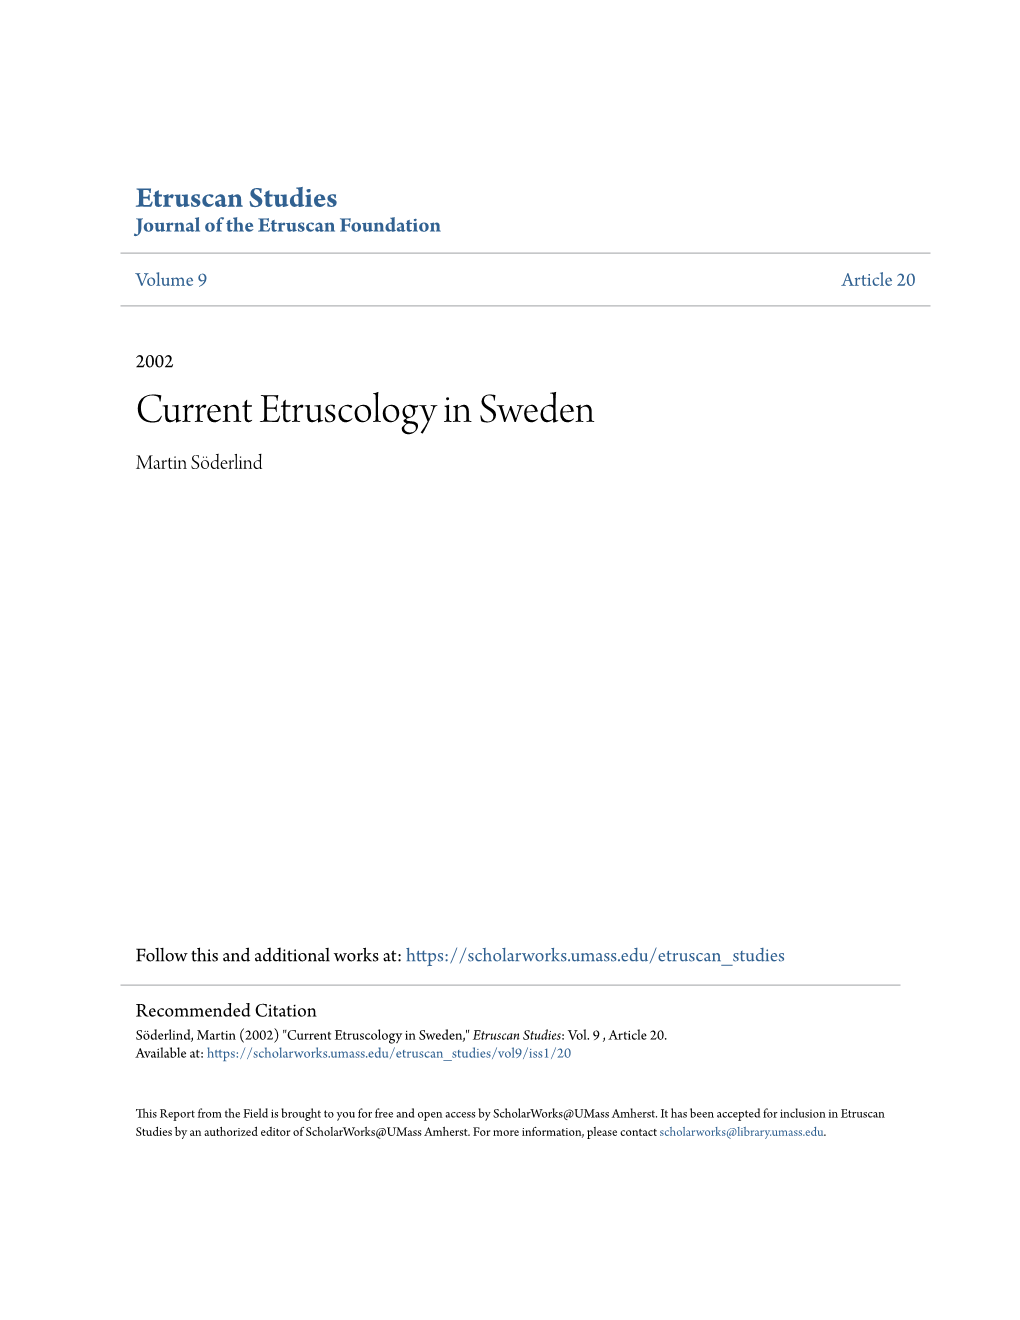 Current Etruscology in Sweden Martin Söderlind